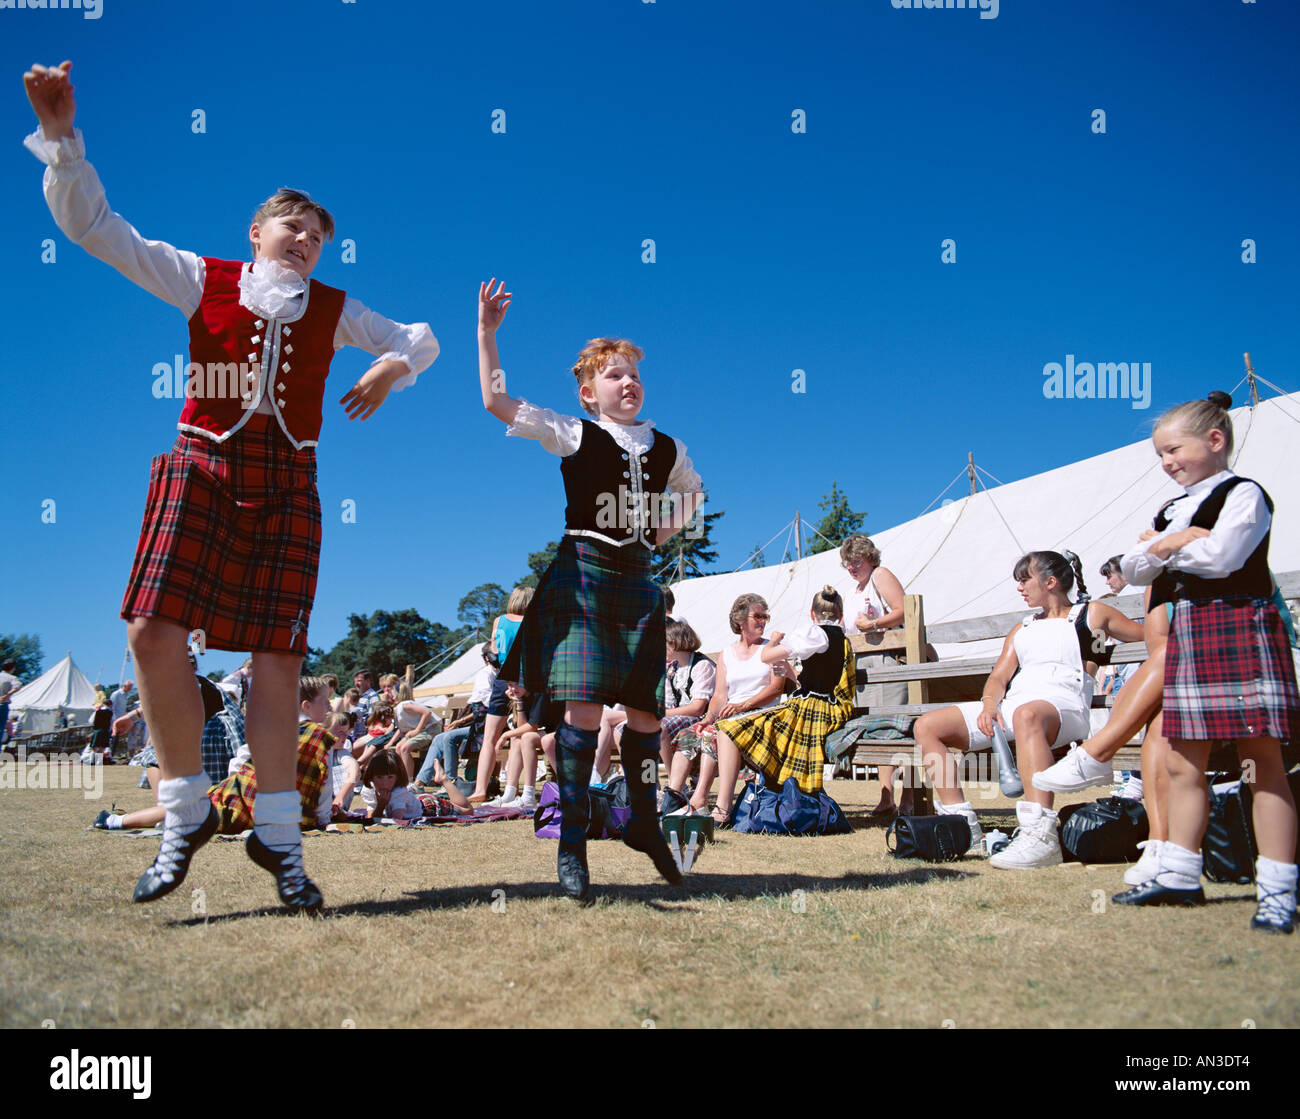 Jeux de montagne / Highland Dancing, Highlands, Scotland Banque D'Images